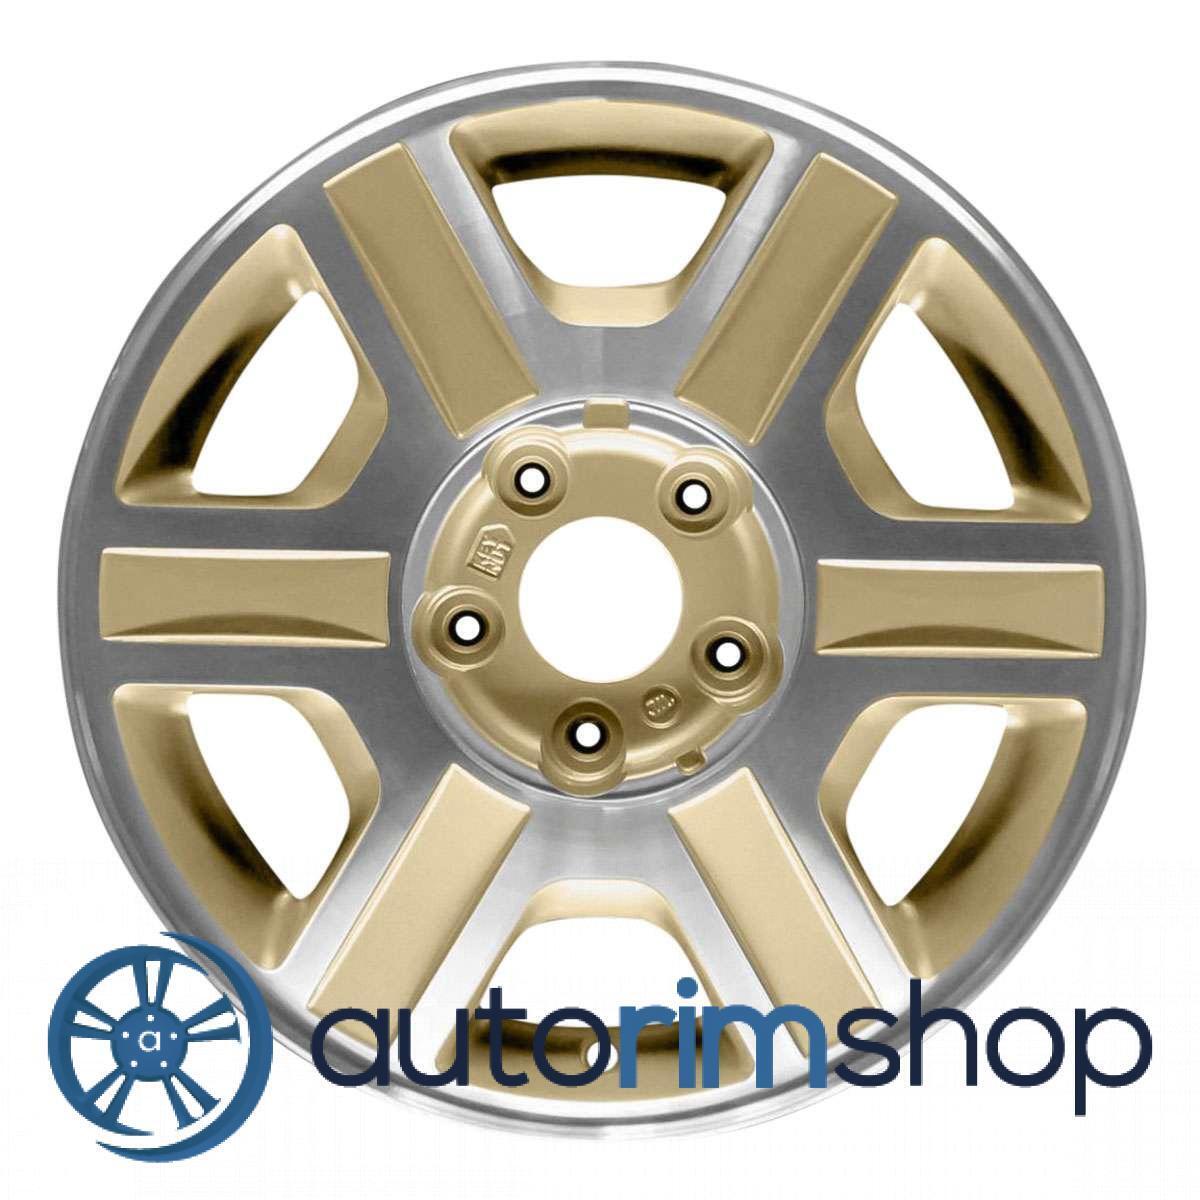 Mercury Villager 2001 2002 16" OEM Wheel* Rim | eBay